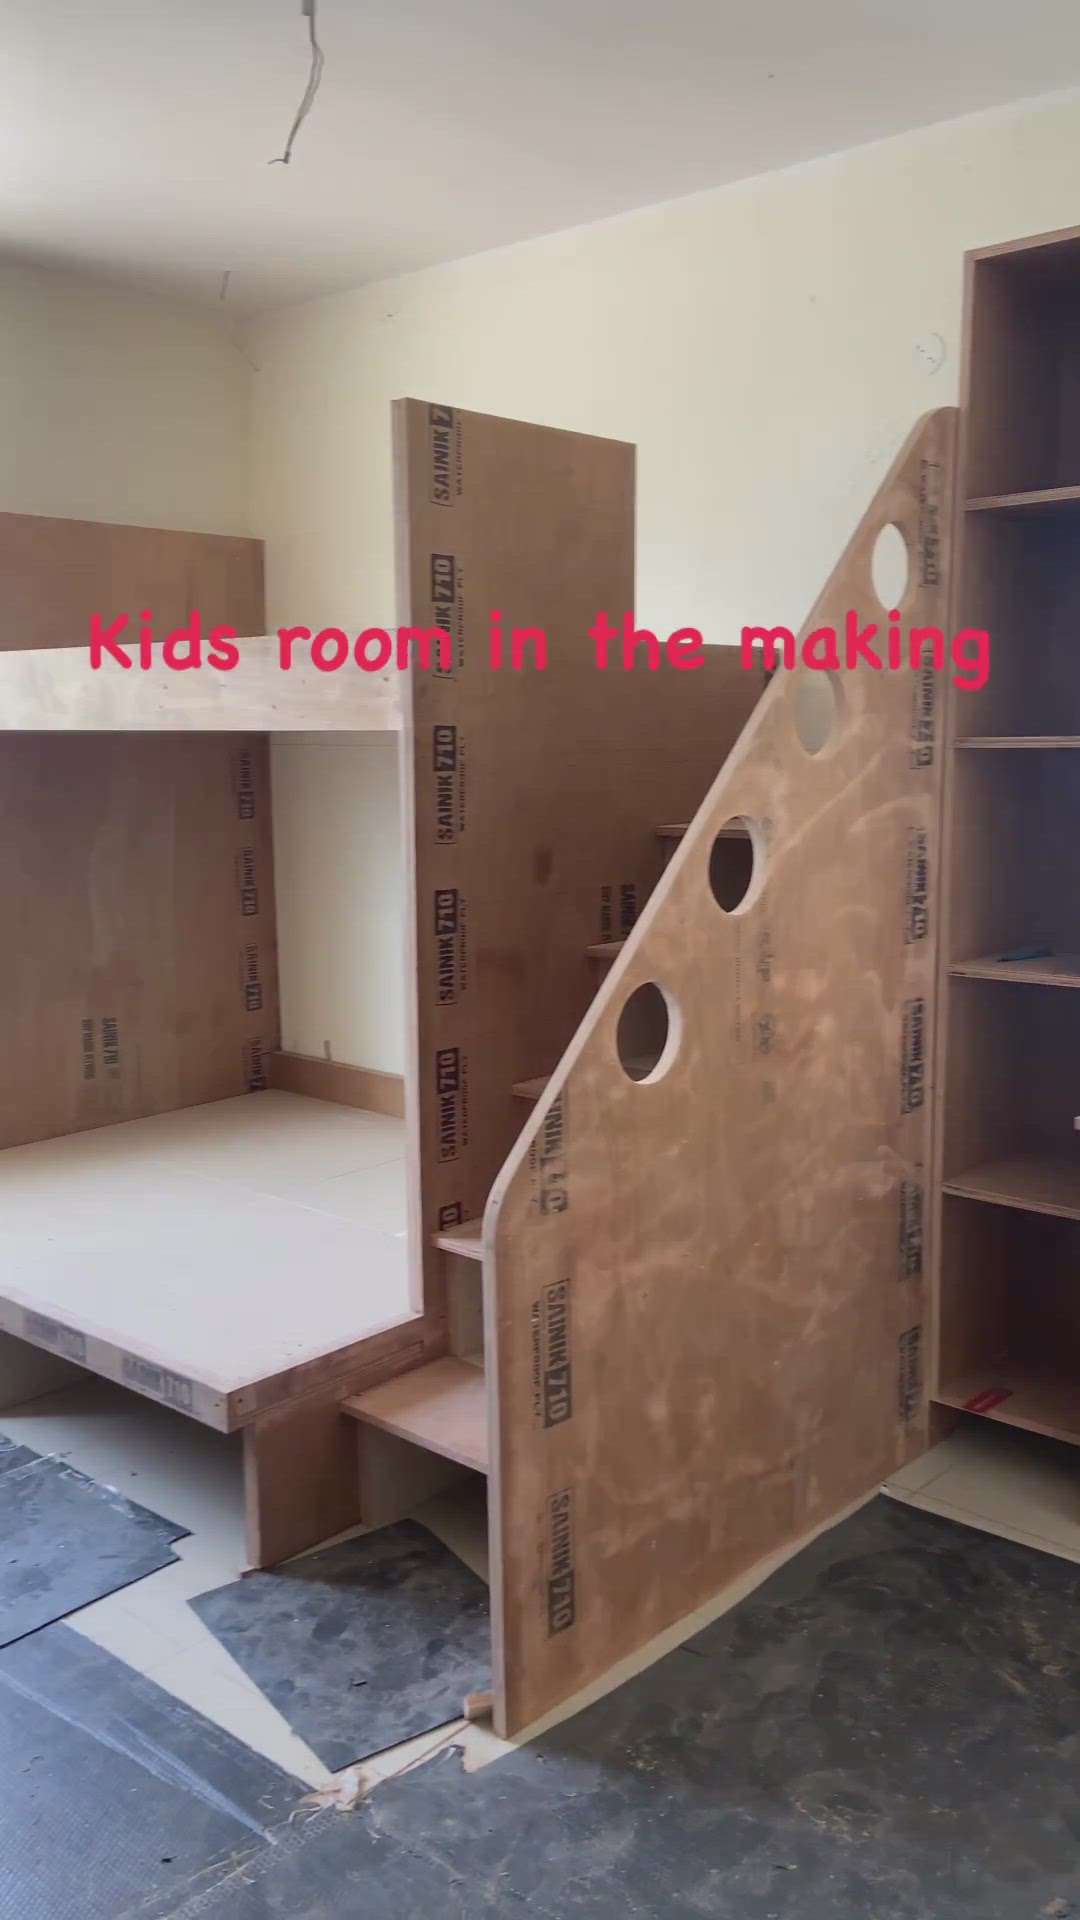 Kids room under progress full interior work @AirportRoad Bhopal

Contact for your House Renovation, Interior, Construction - 8319099875

#HouseRenovation #renovations #InteriorDesigner #KitchenInterior #WalkInWardrobe #MasterBedroom #BedroomDecor #KingsizeBedroom #BedroomIdeas #BedroomDesigns #ModernBedMaking  #bedroominterio #wadrobedesign #WardrobeIdeas #SlidingDoorWardrobe #LargeKitchen #KitchenIdeas #KitchenCabinet #LargeKitchen #ModularKitchen #LivingRoomTVCabinet #LivingRoomTV #KidsRoom #kidsroomdesign